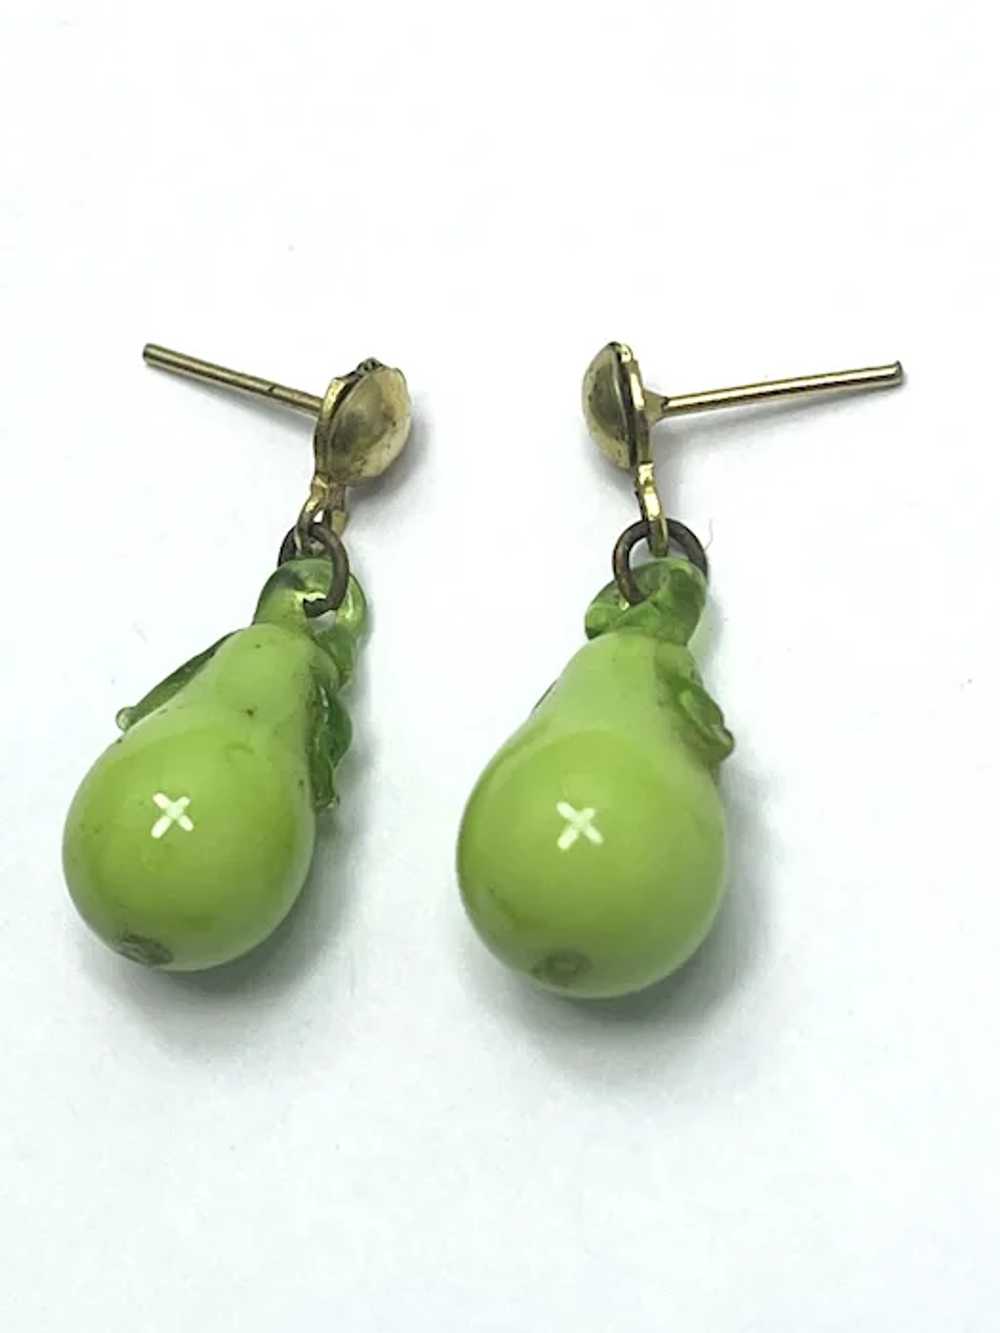 Vintage Green Pear Glass Fruit Earrings - image 4